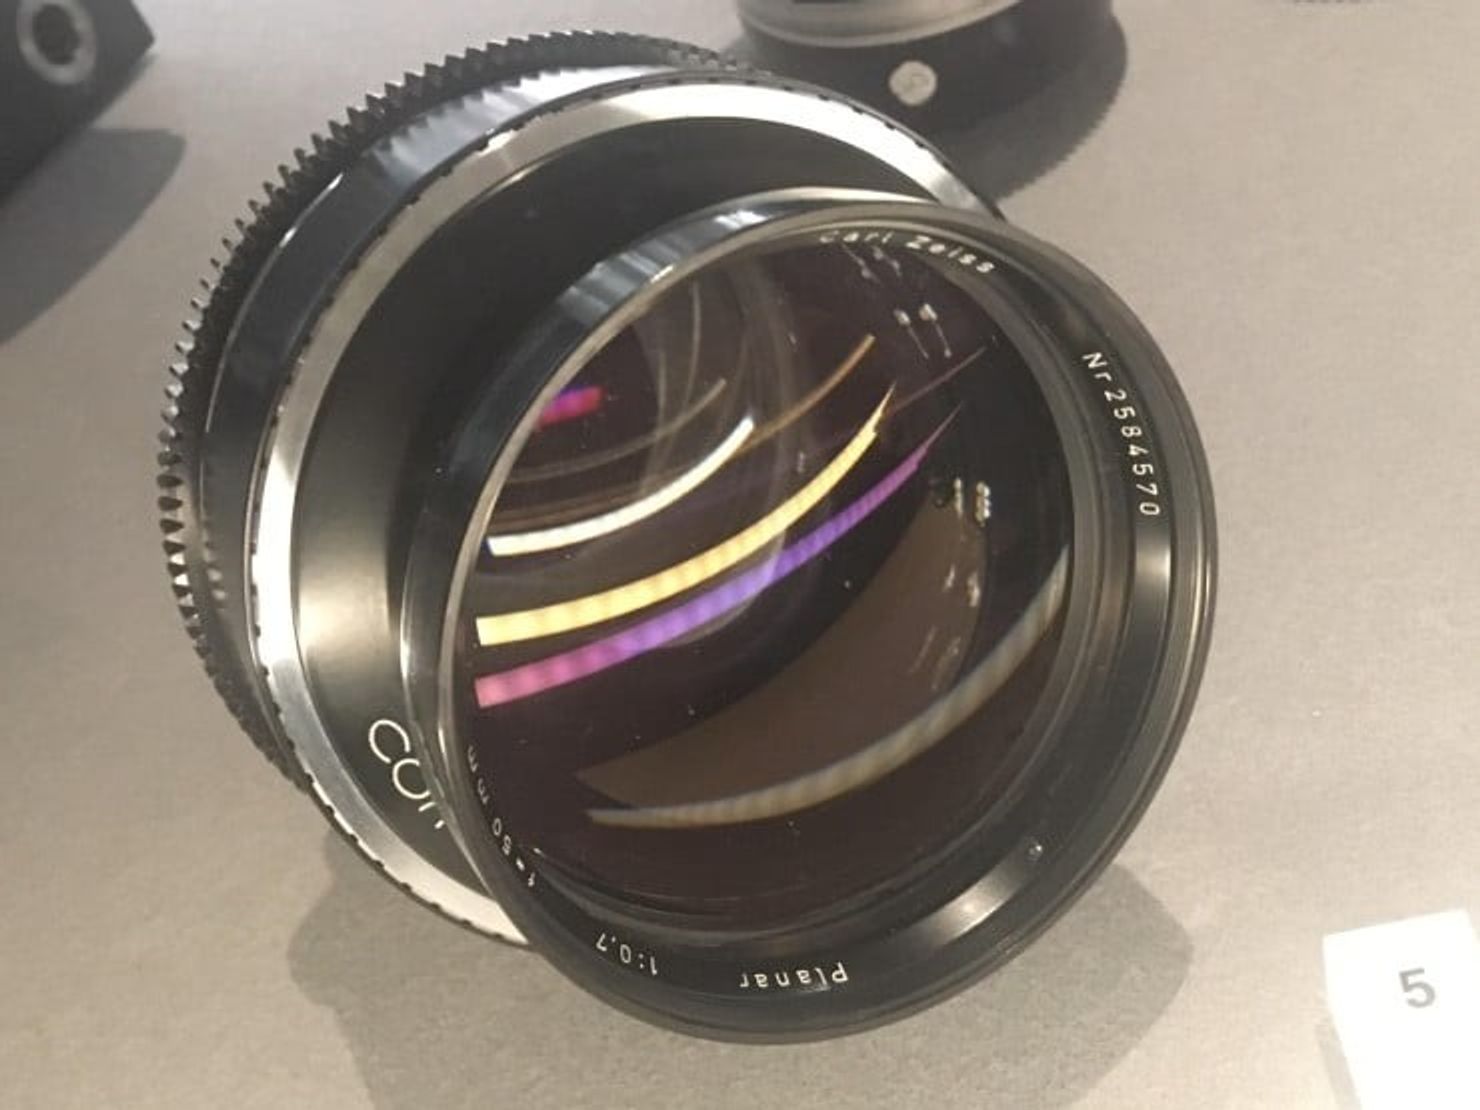 NASA's Zeiss f0.7 50mm lens